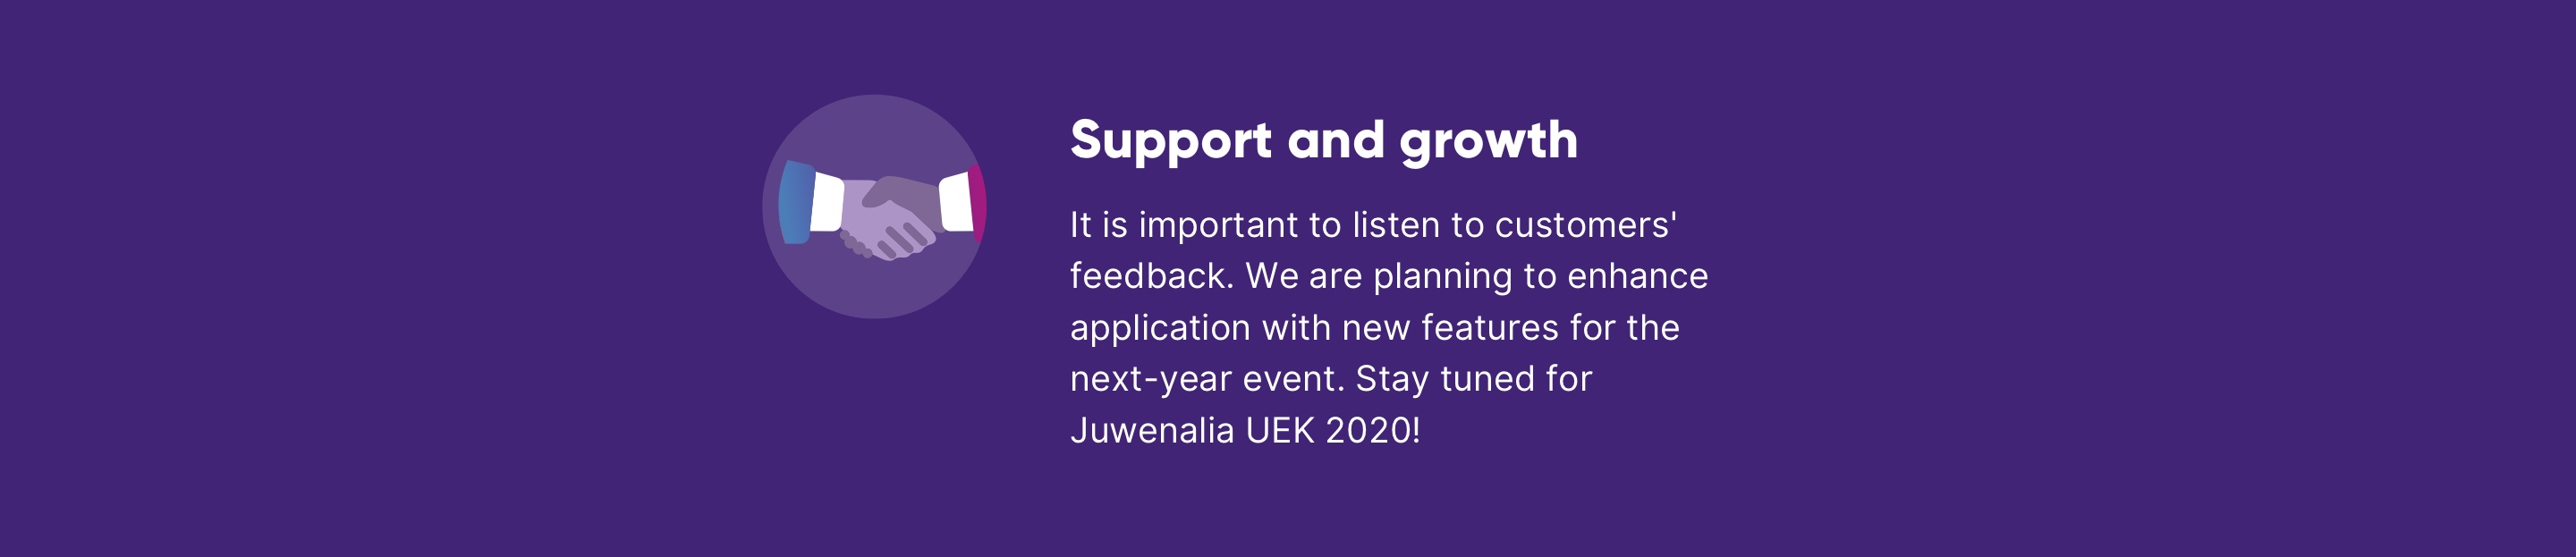 Juwenalia UEK application development process: support